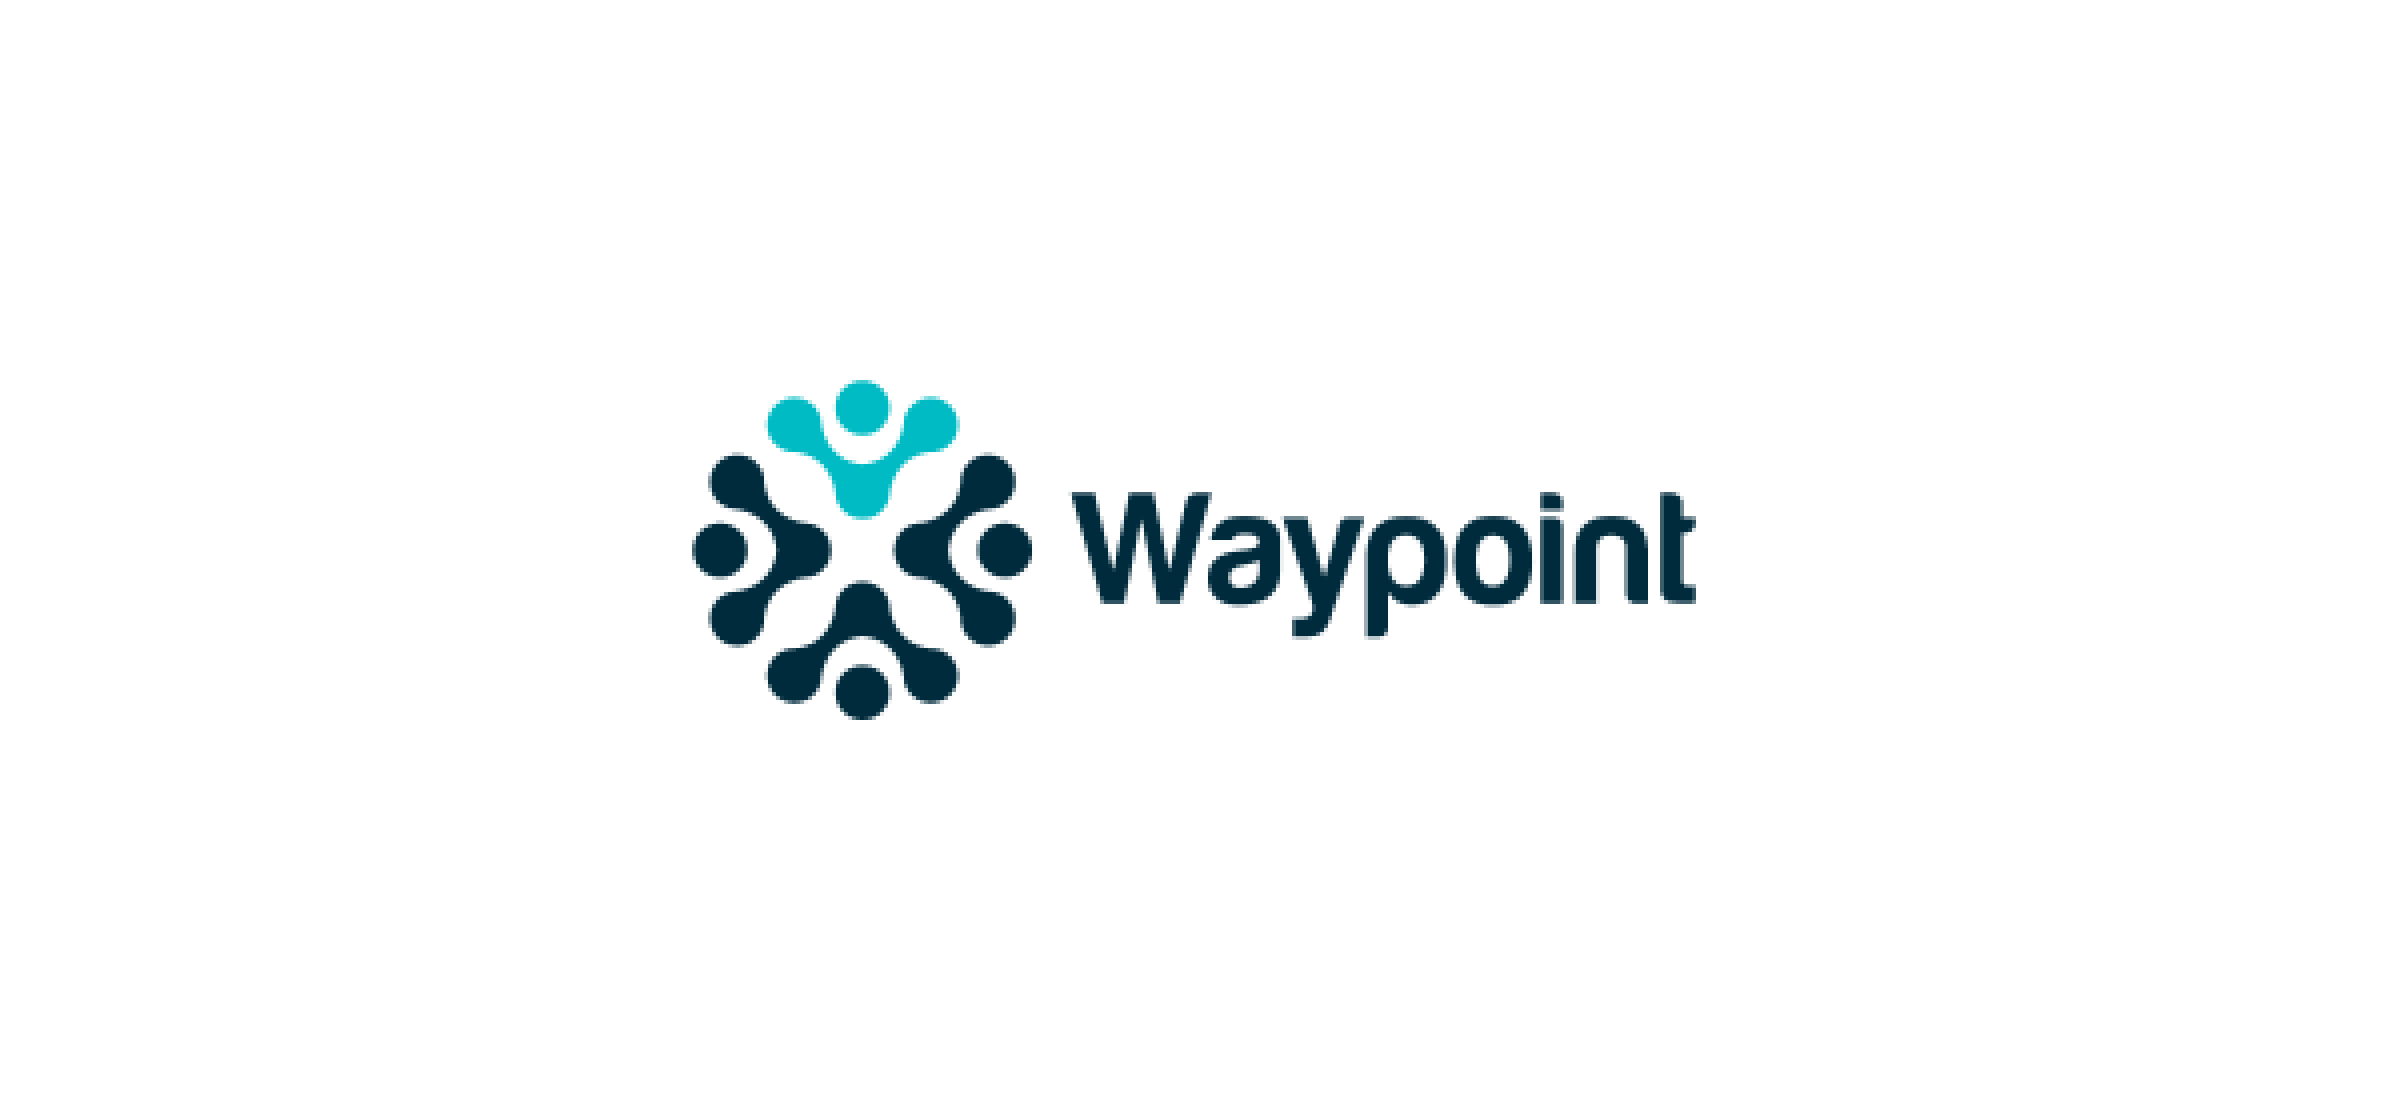 The Waypoint logo